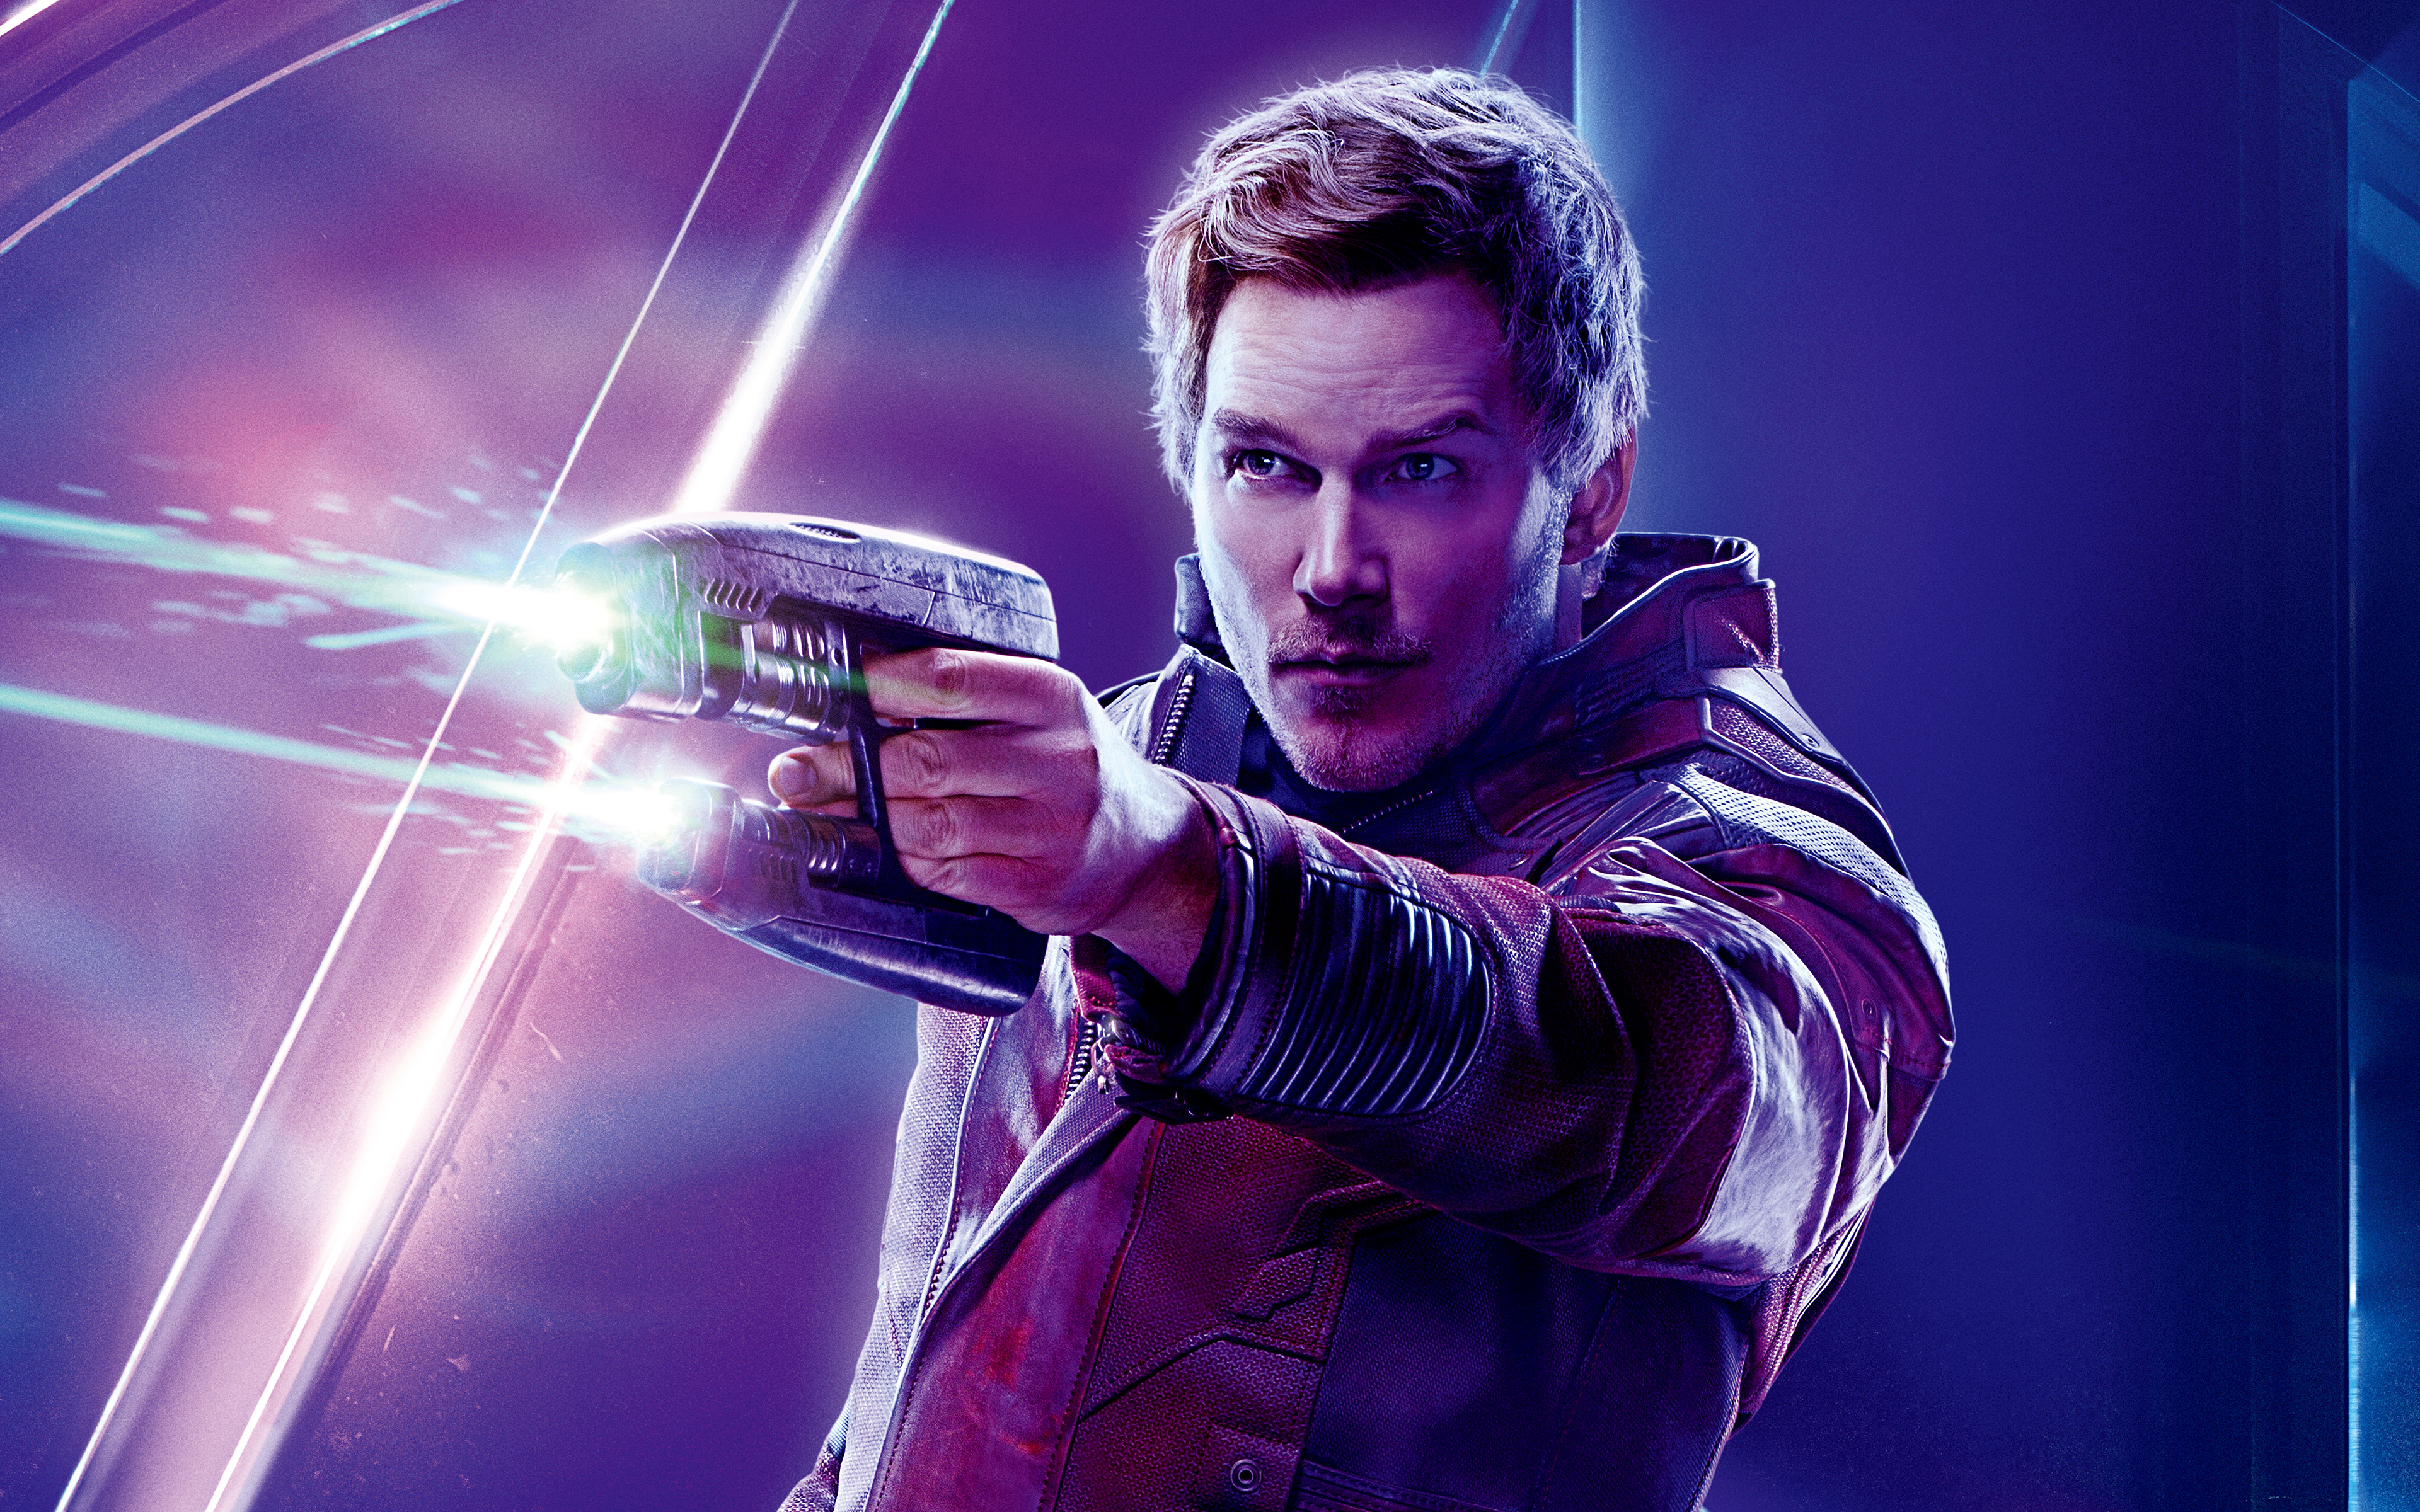 Star Lord in Avengers Infinity War 4K 8K Wallpapers